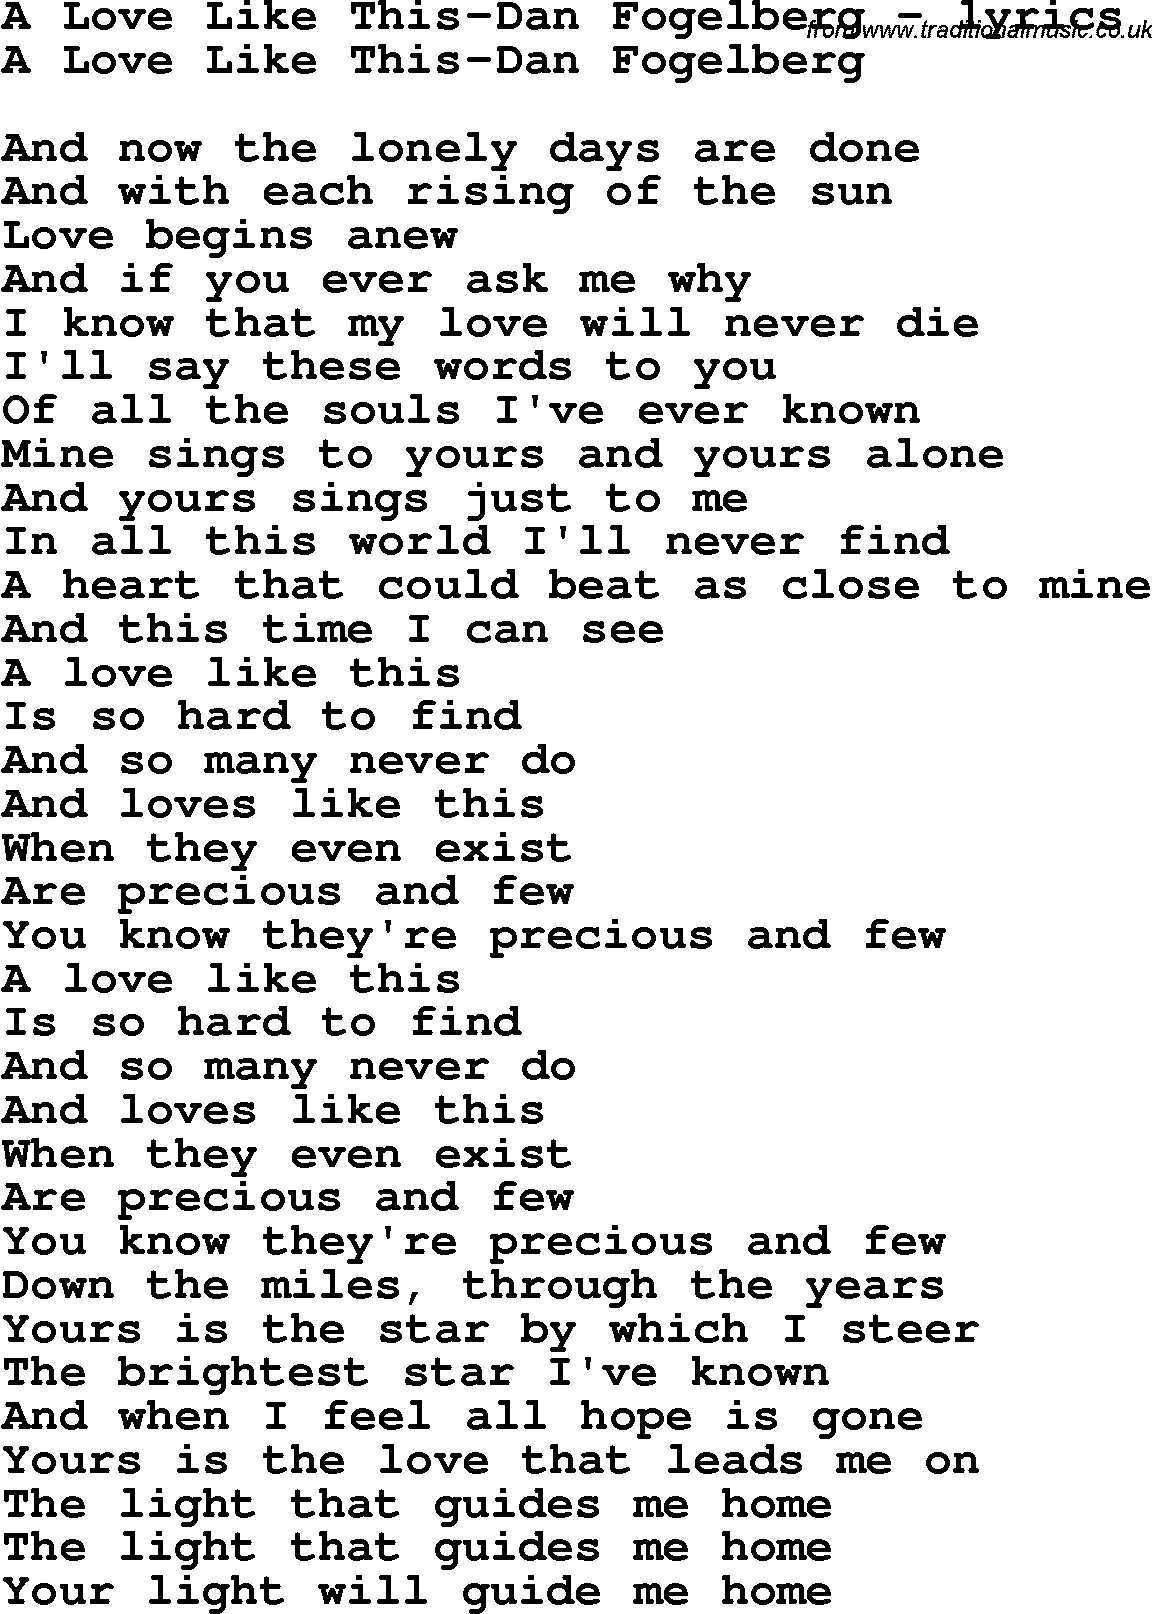 Love Song Lyrics for: A Love Like This-Dan Fogelberg